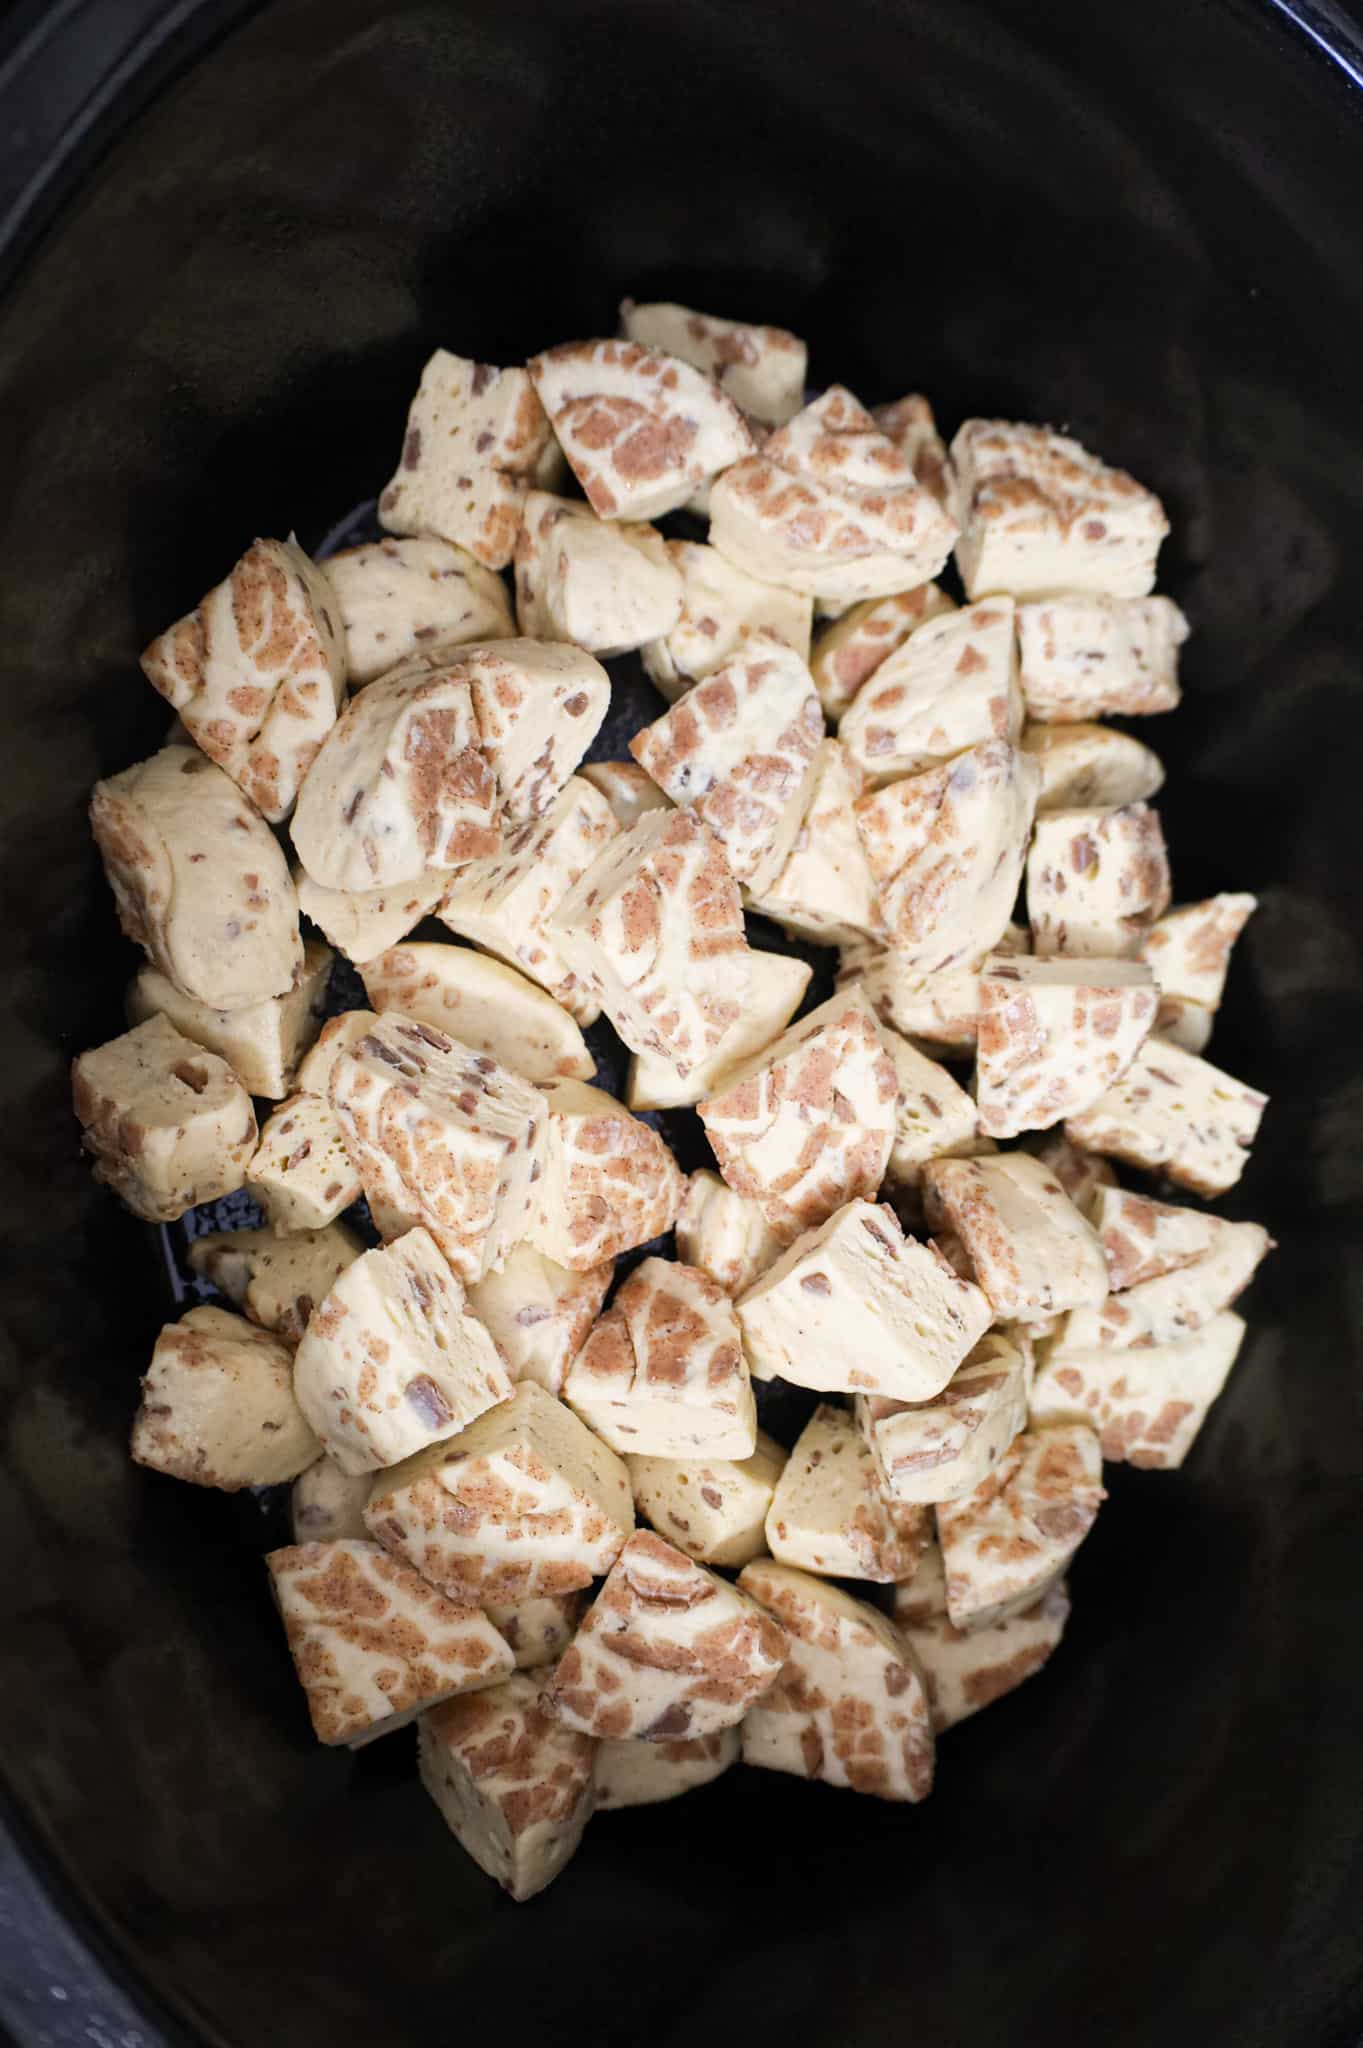 quarters of Pillsbury cinnamon roll dough in a Crock Pot